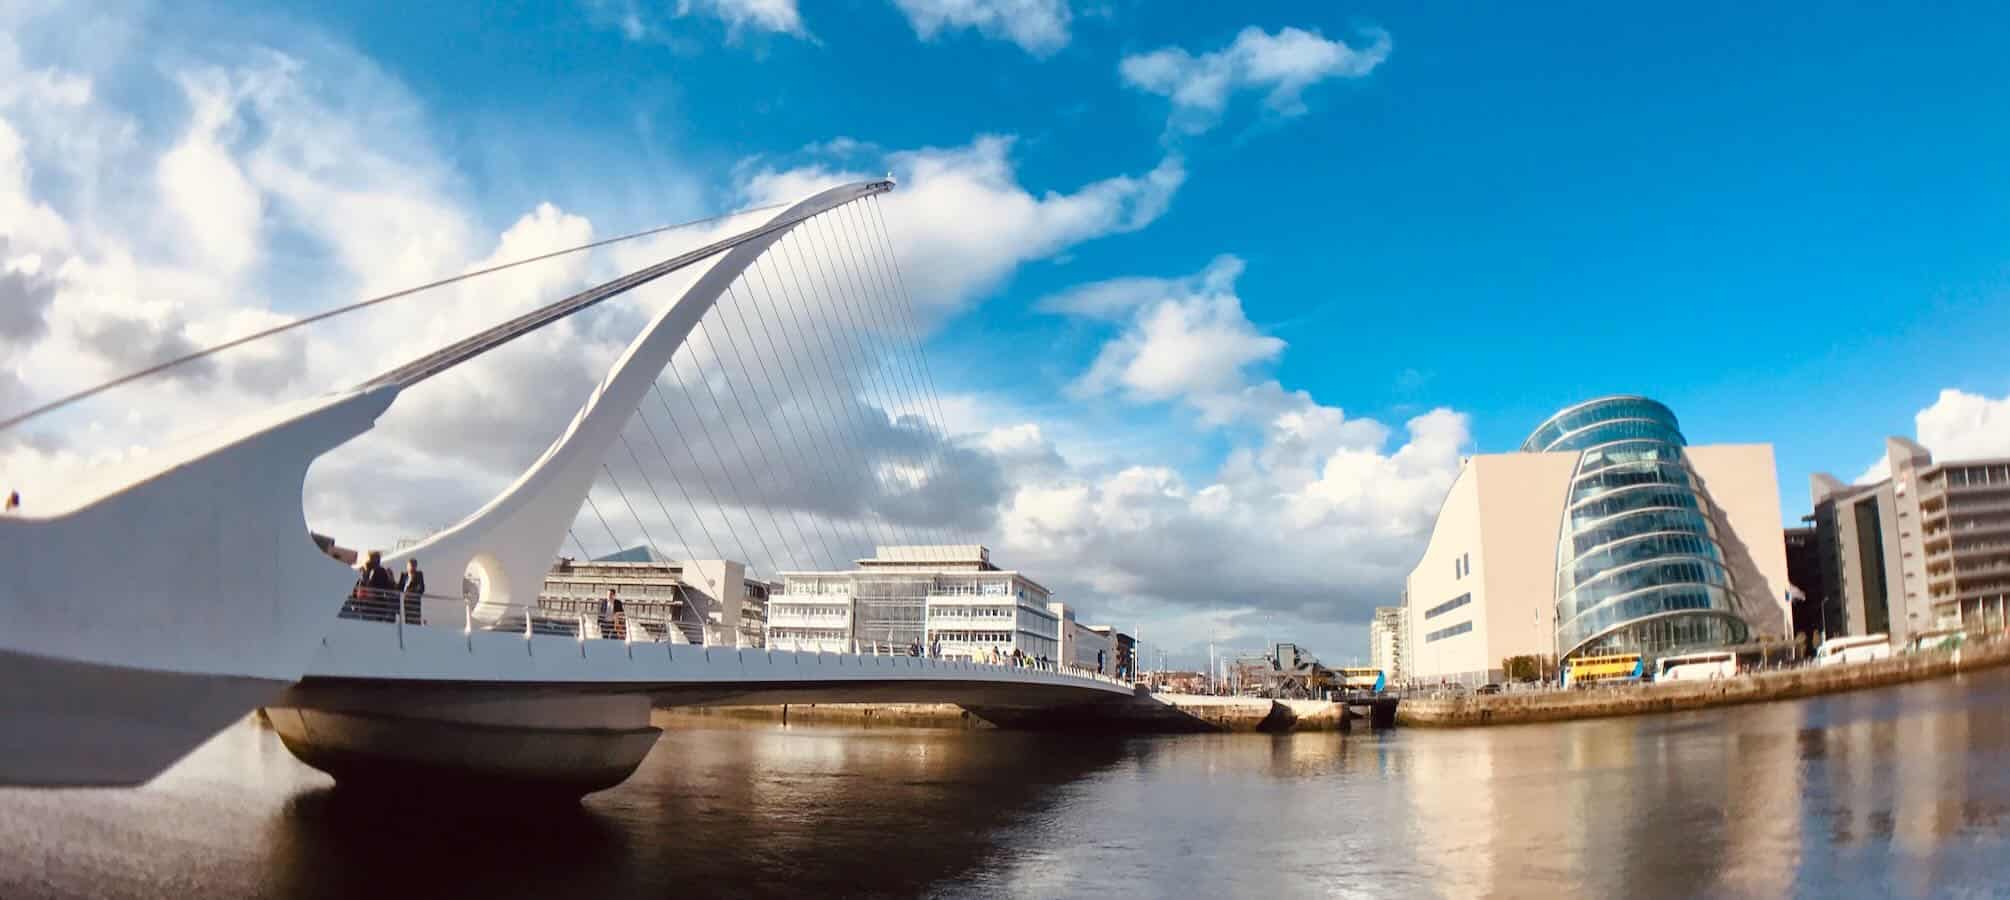 Samuel-Beckett-Bridge in Dublin